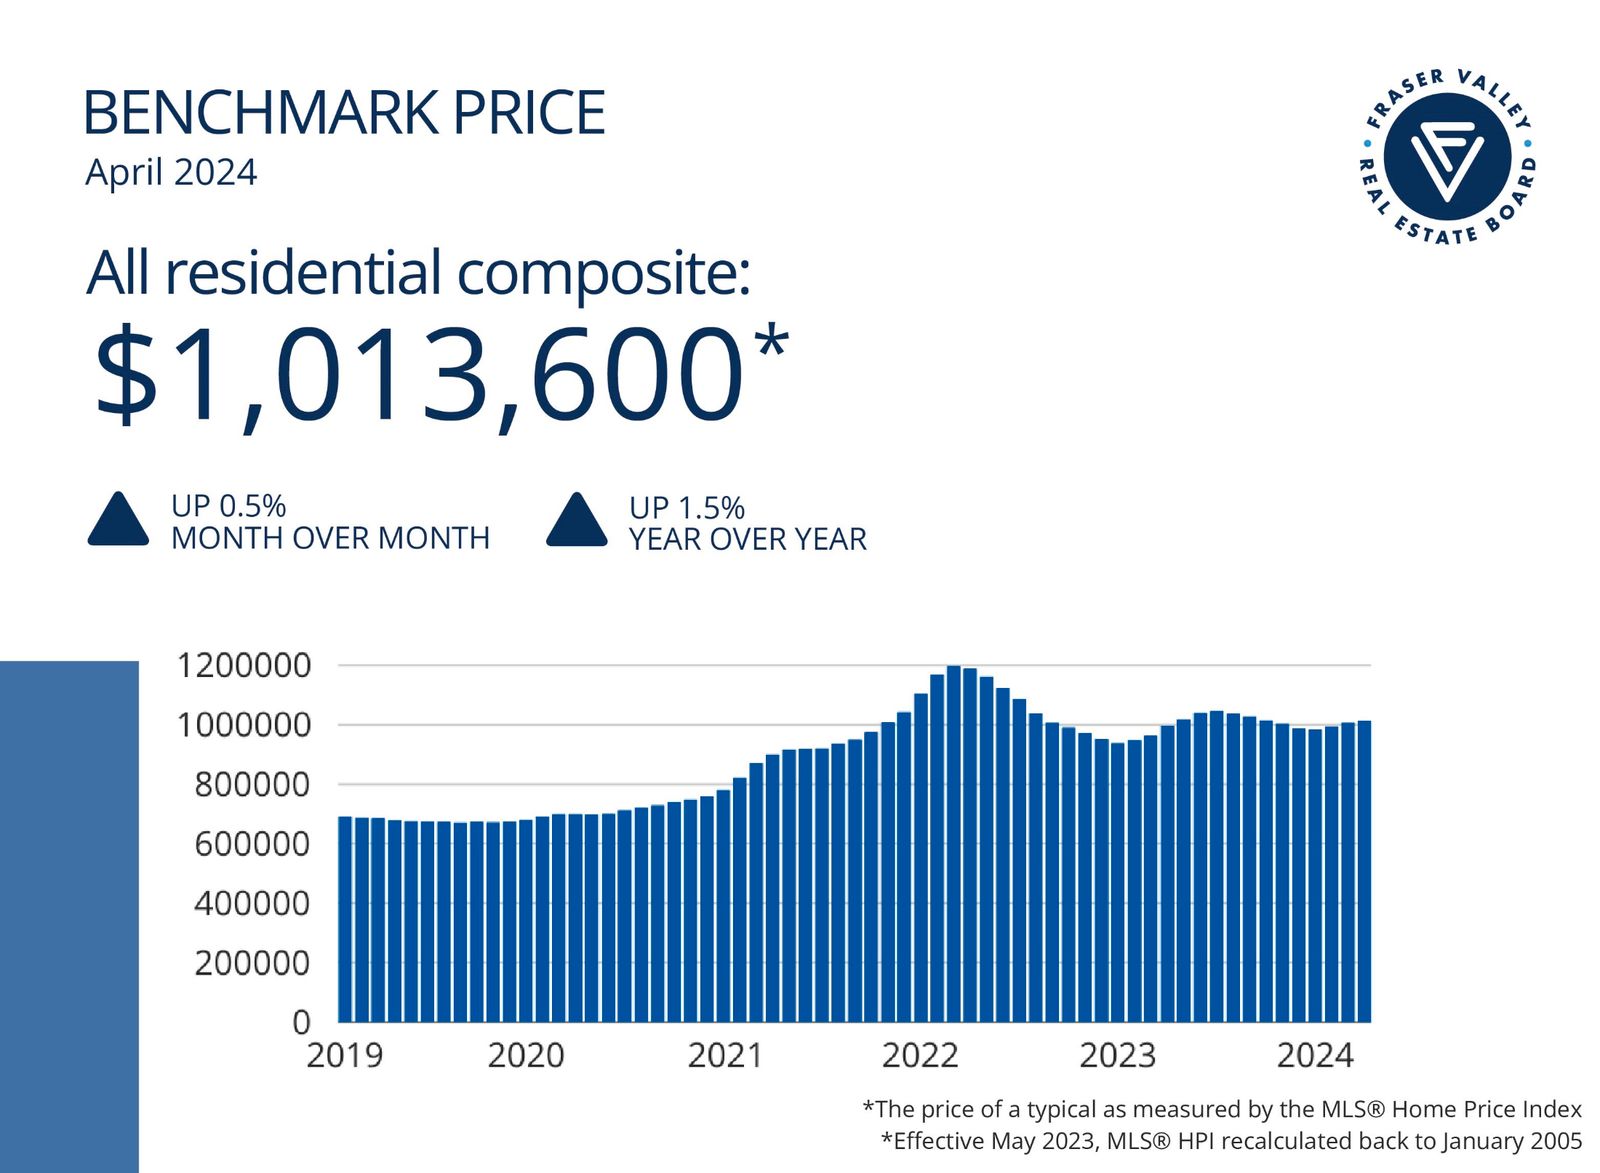 Benchmark Price